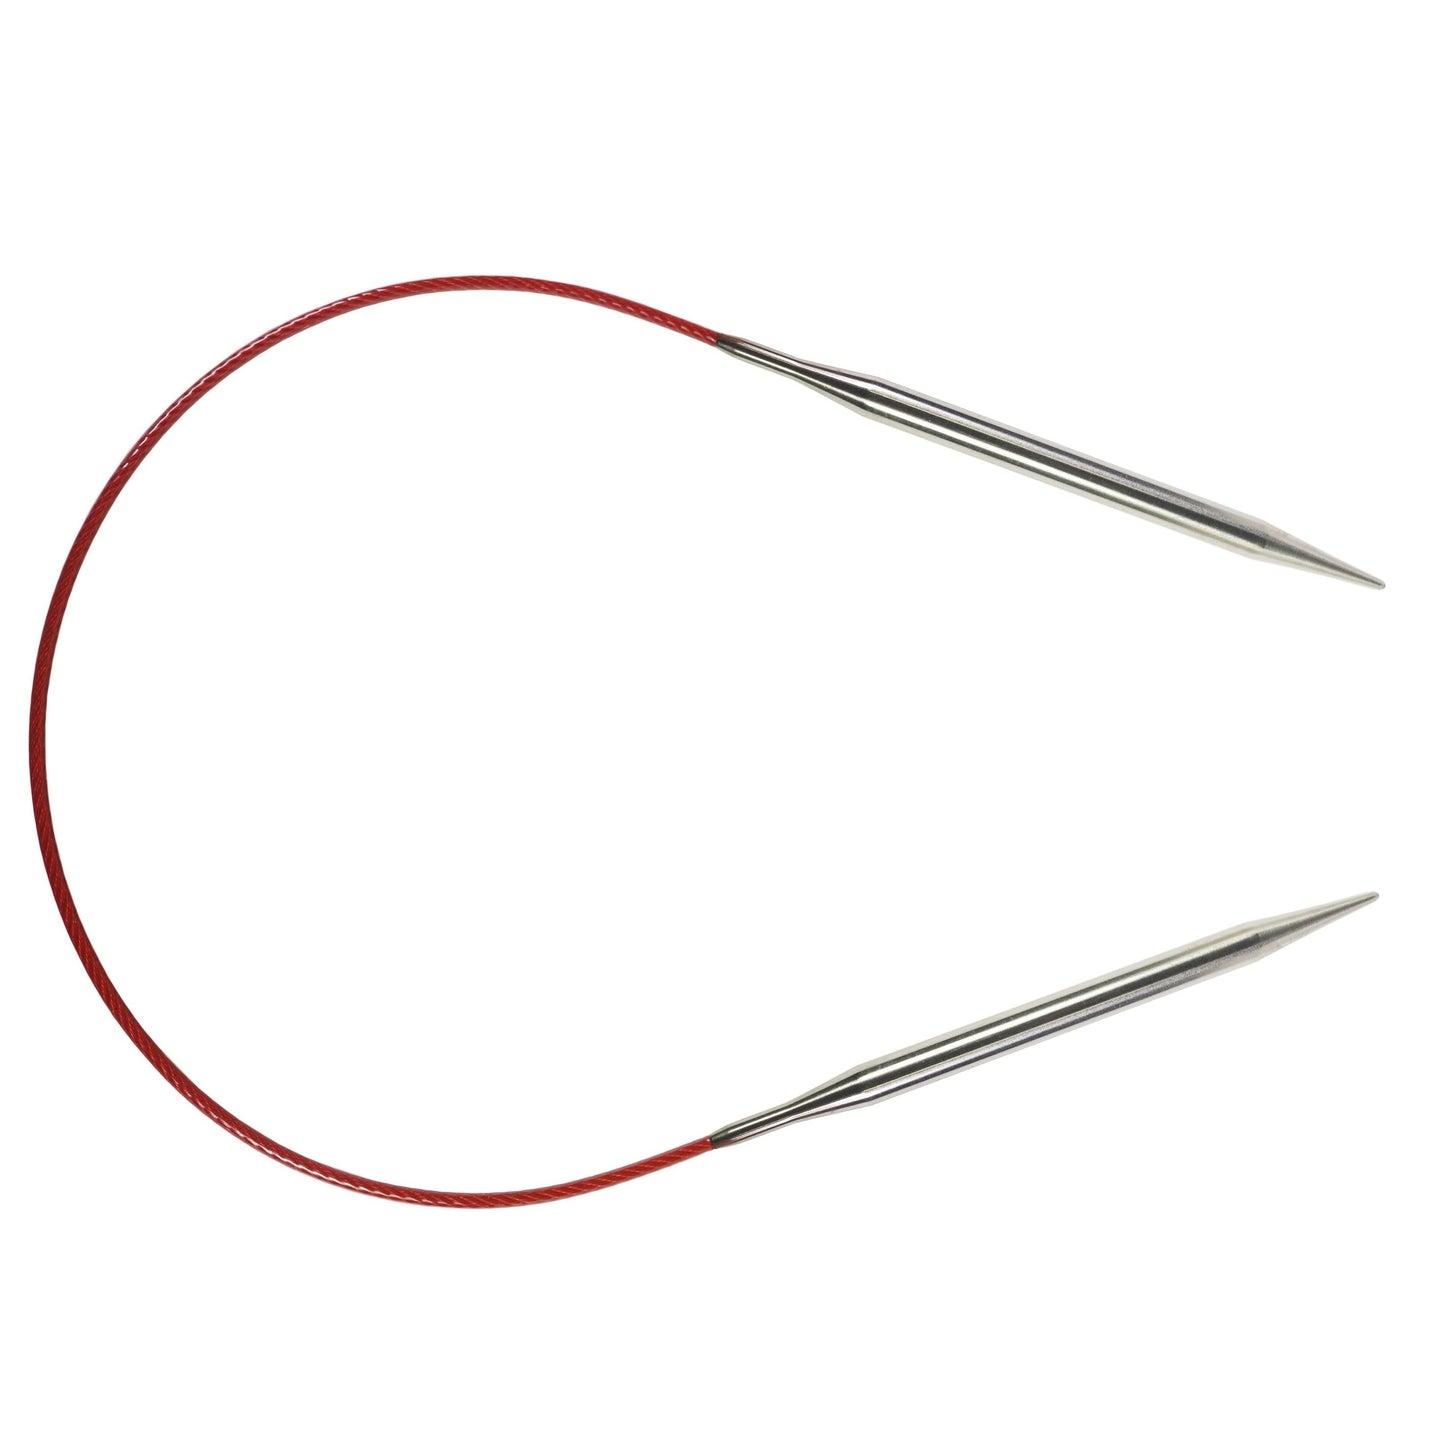 23 cm / 9" Red Circular Needles - US 00 (1.75 mm) at Wabi Sabi